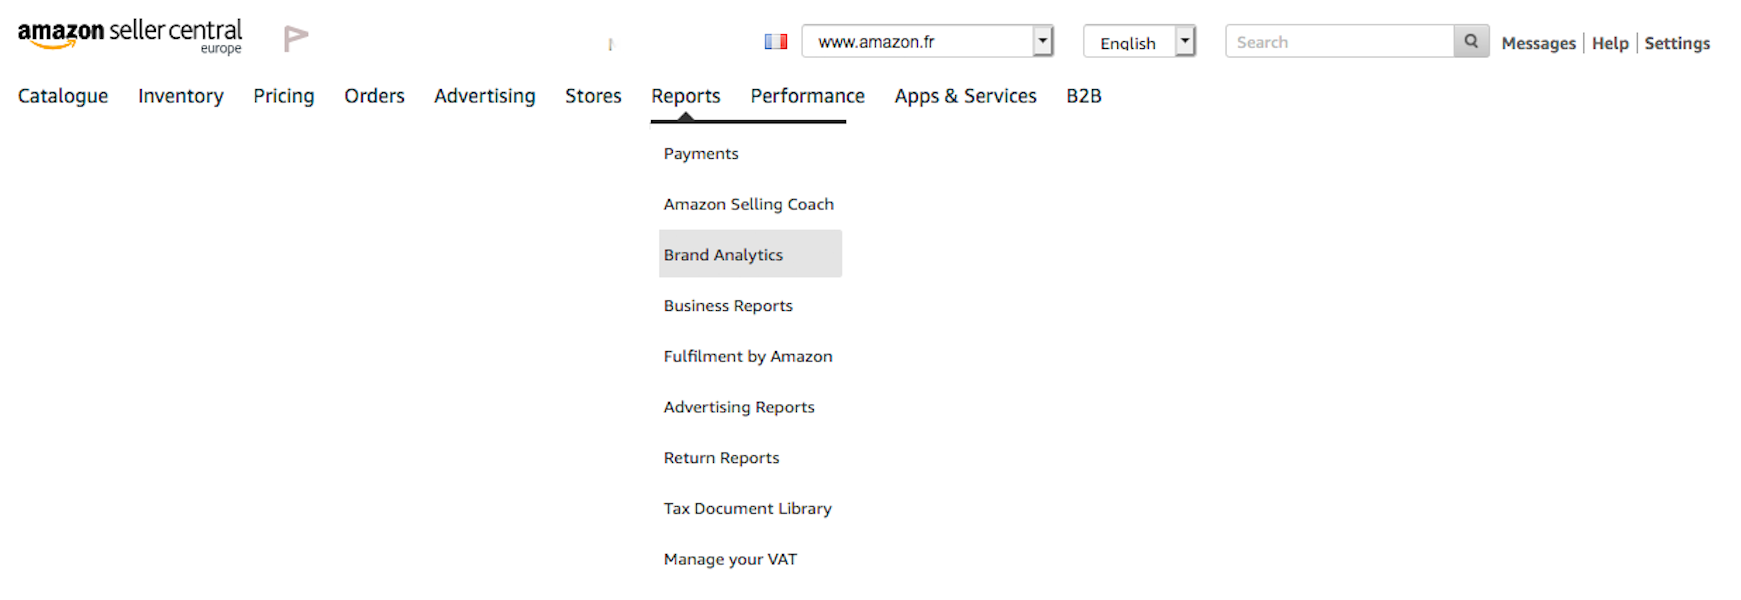 Amazon Brand Analytics tab